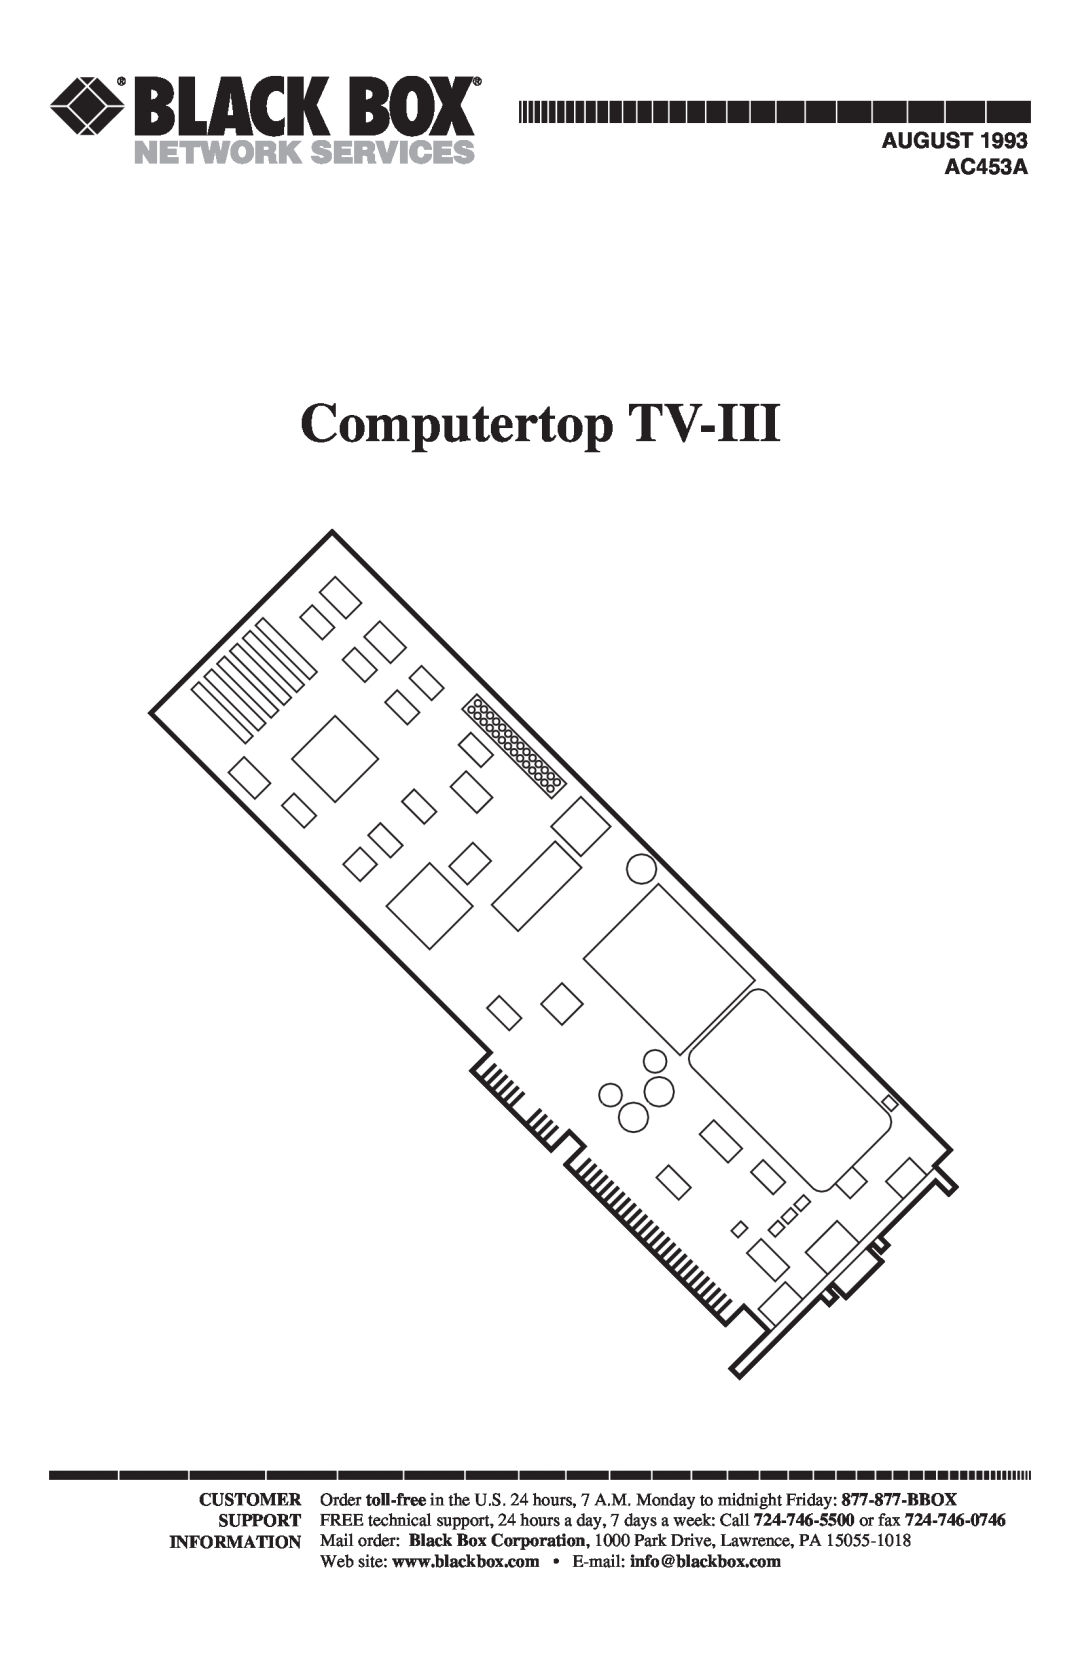 IBM manual Computertop TV-III, AUGUST AC453A 